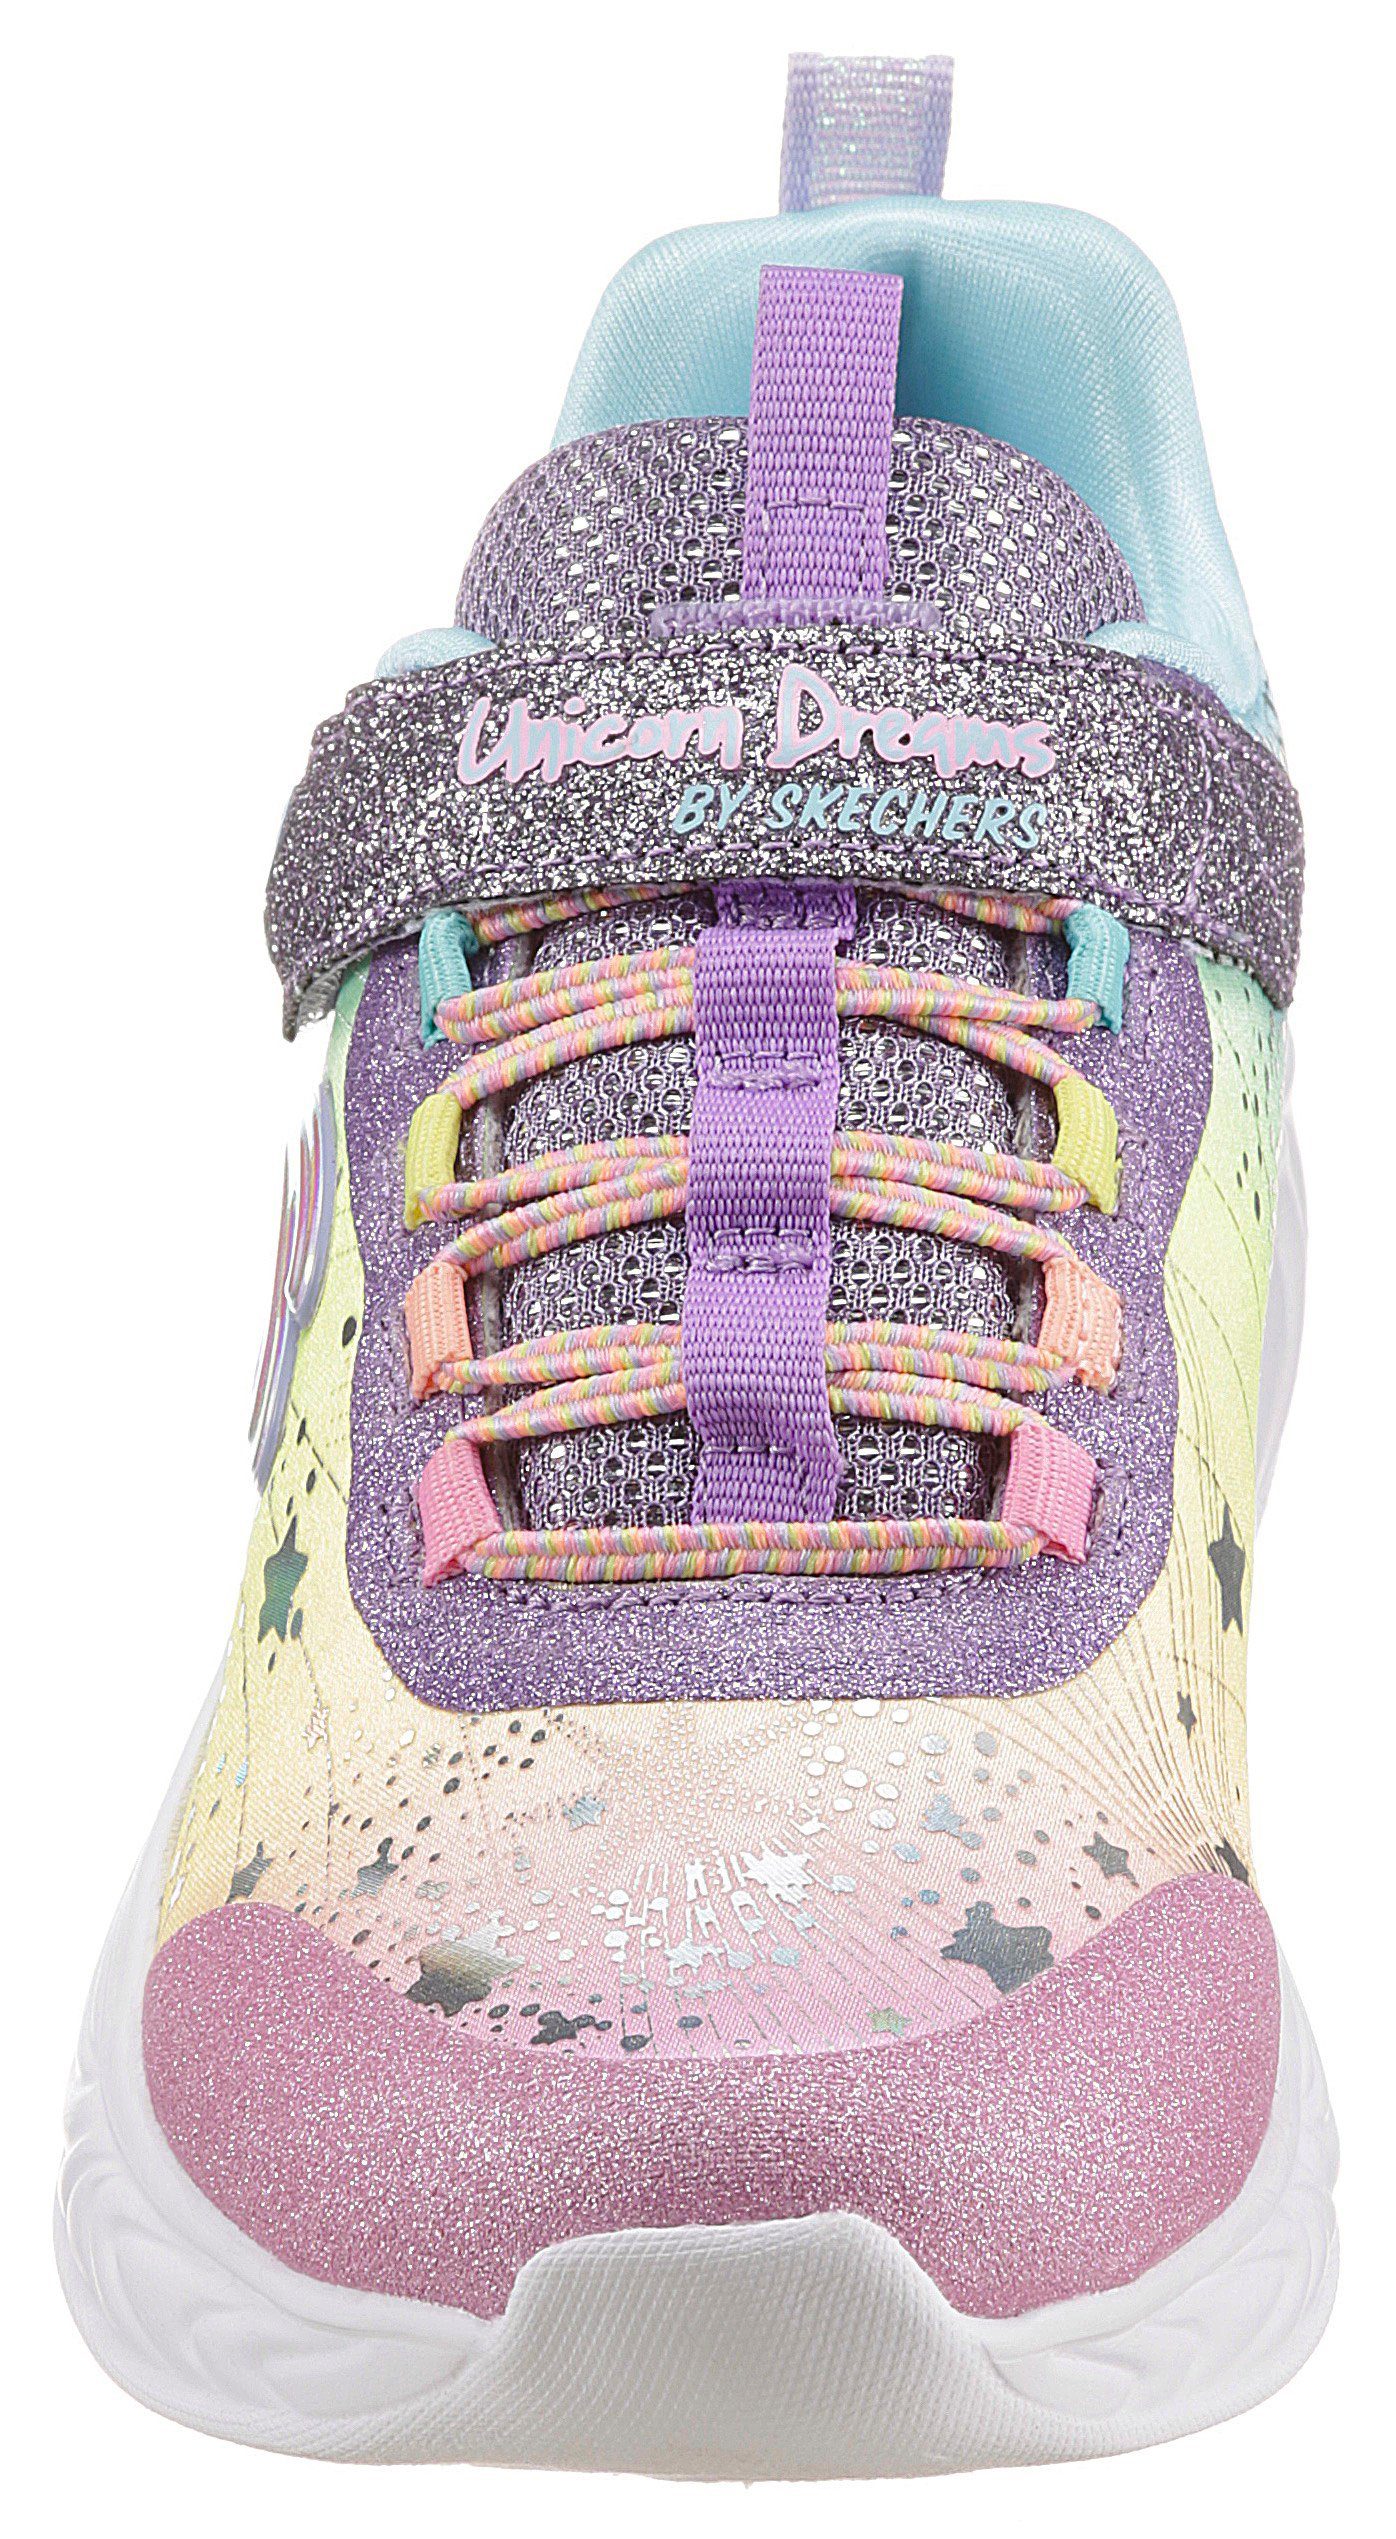 Skechers Kids UNICORN DREAMS Sneaker multi und Einhornmotiv Blinkfunktion purple mit